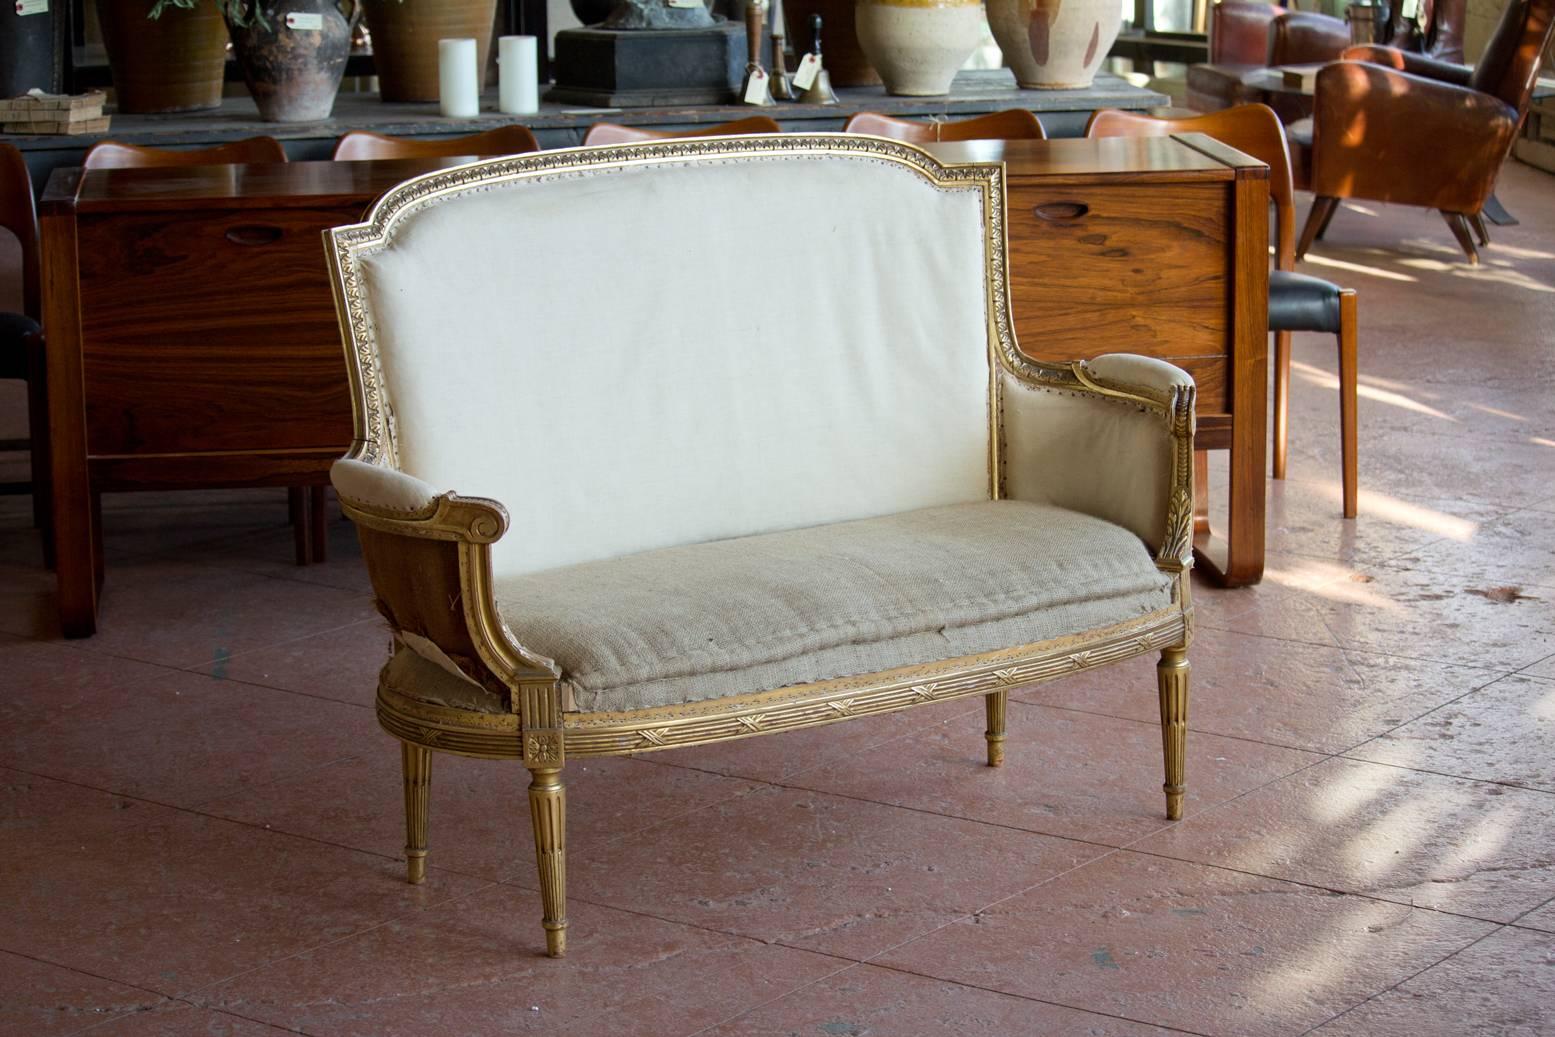 Antique Louis XVI petite bergère settee with original gilded frame.